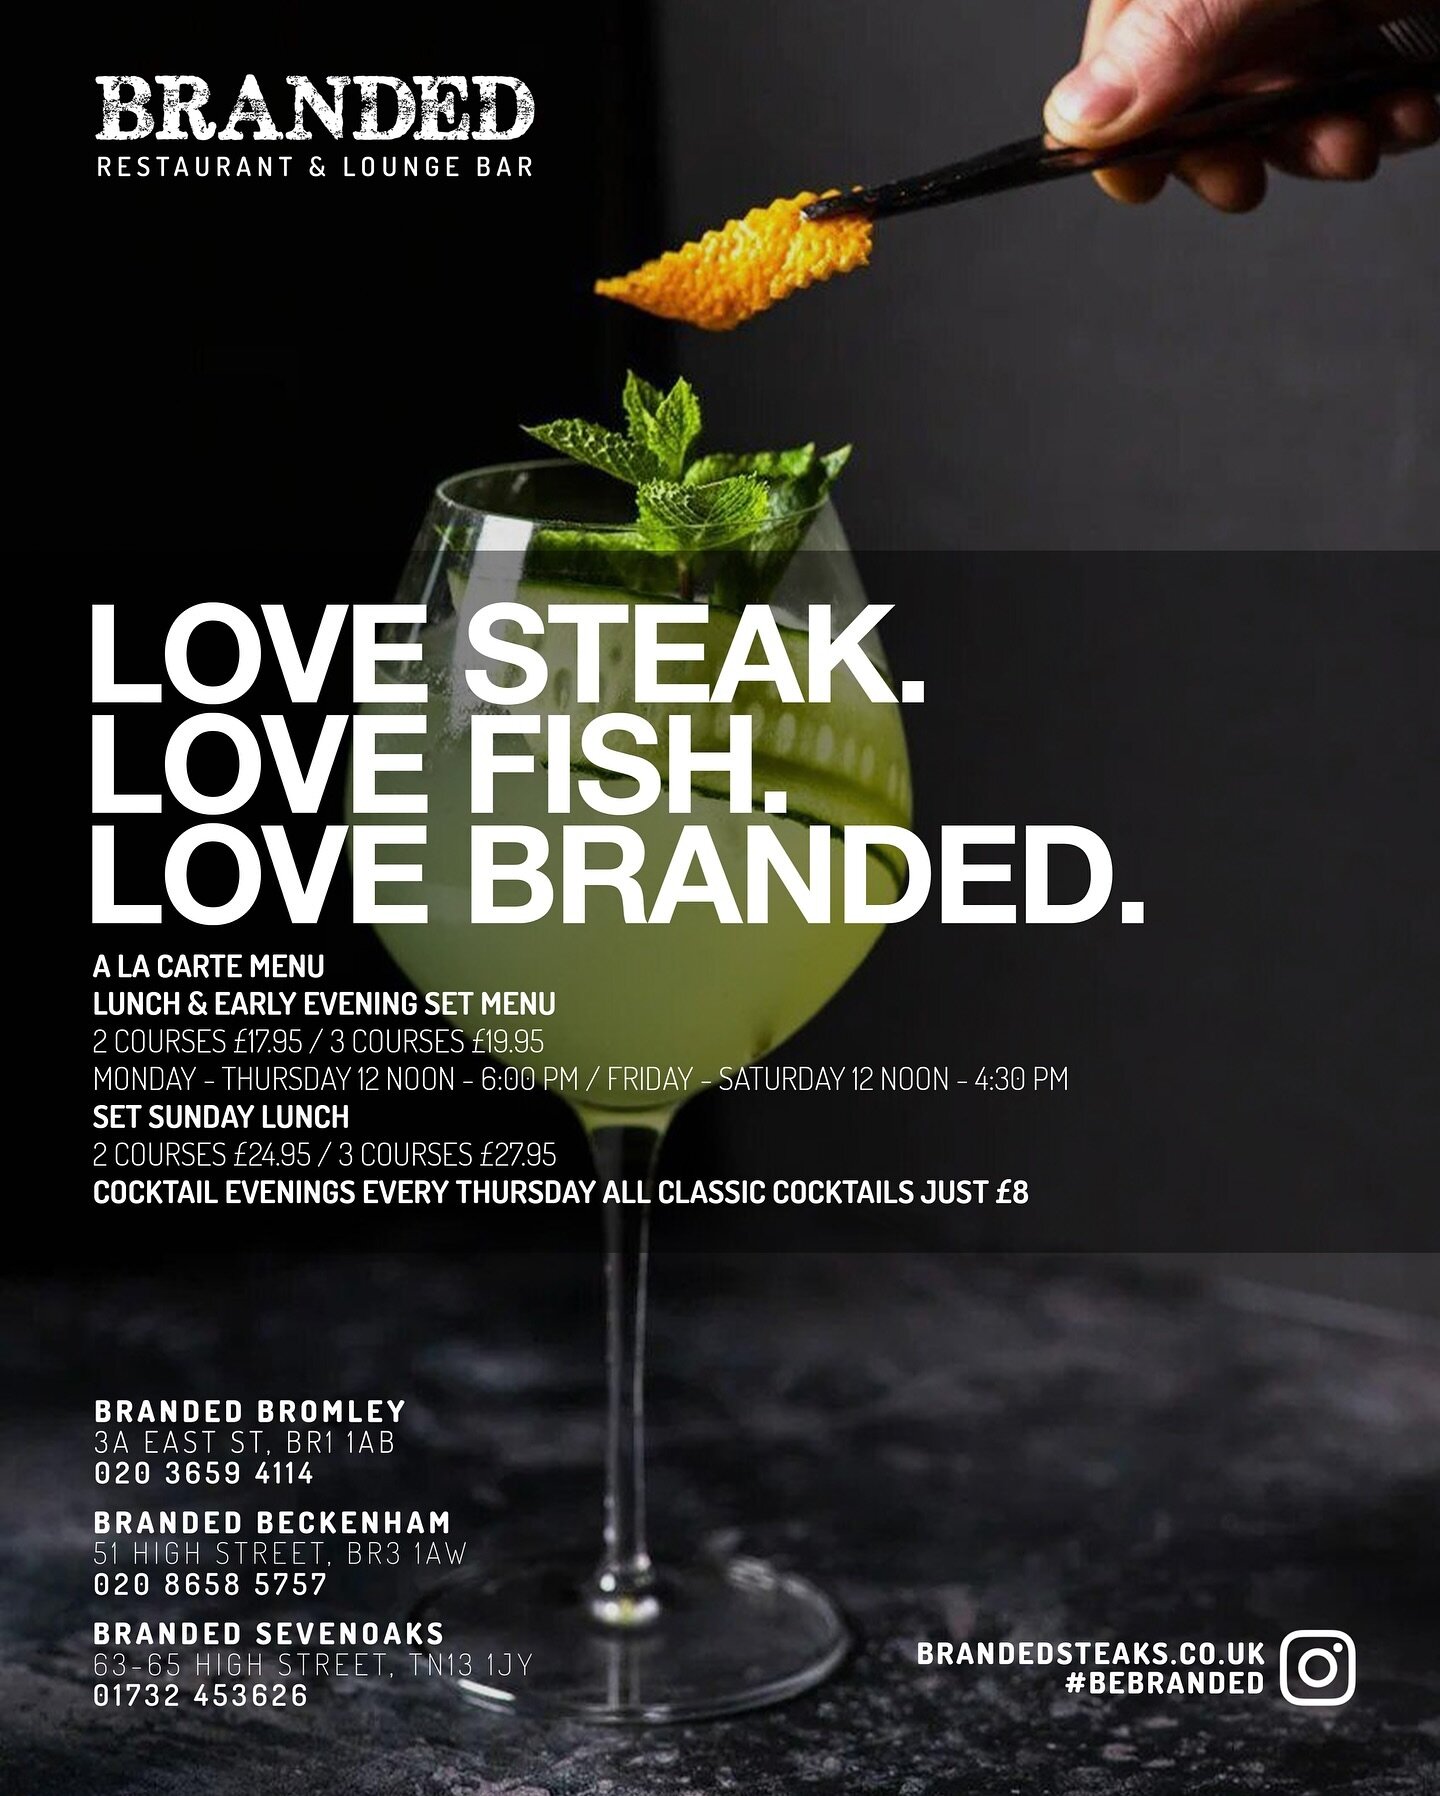 Love Steak. Love Fish. Love Branded. 🥂

#bebranded #beckenham #sevenoaks #bromley #brandedsteaks